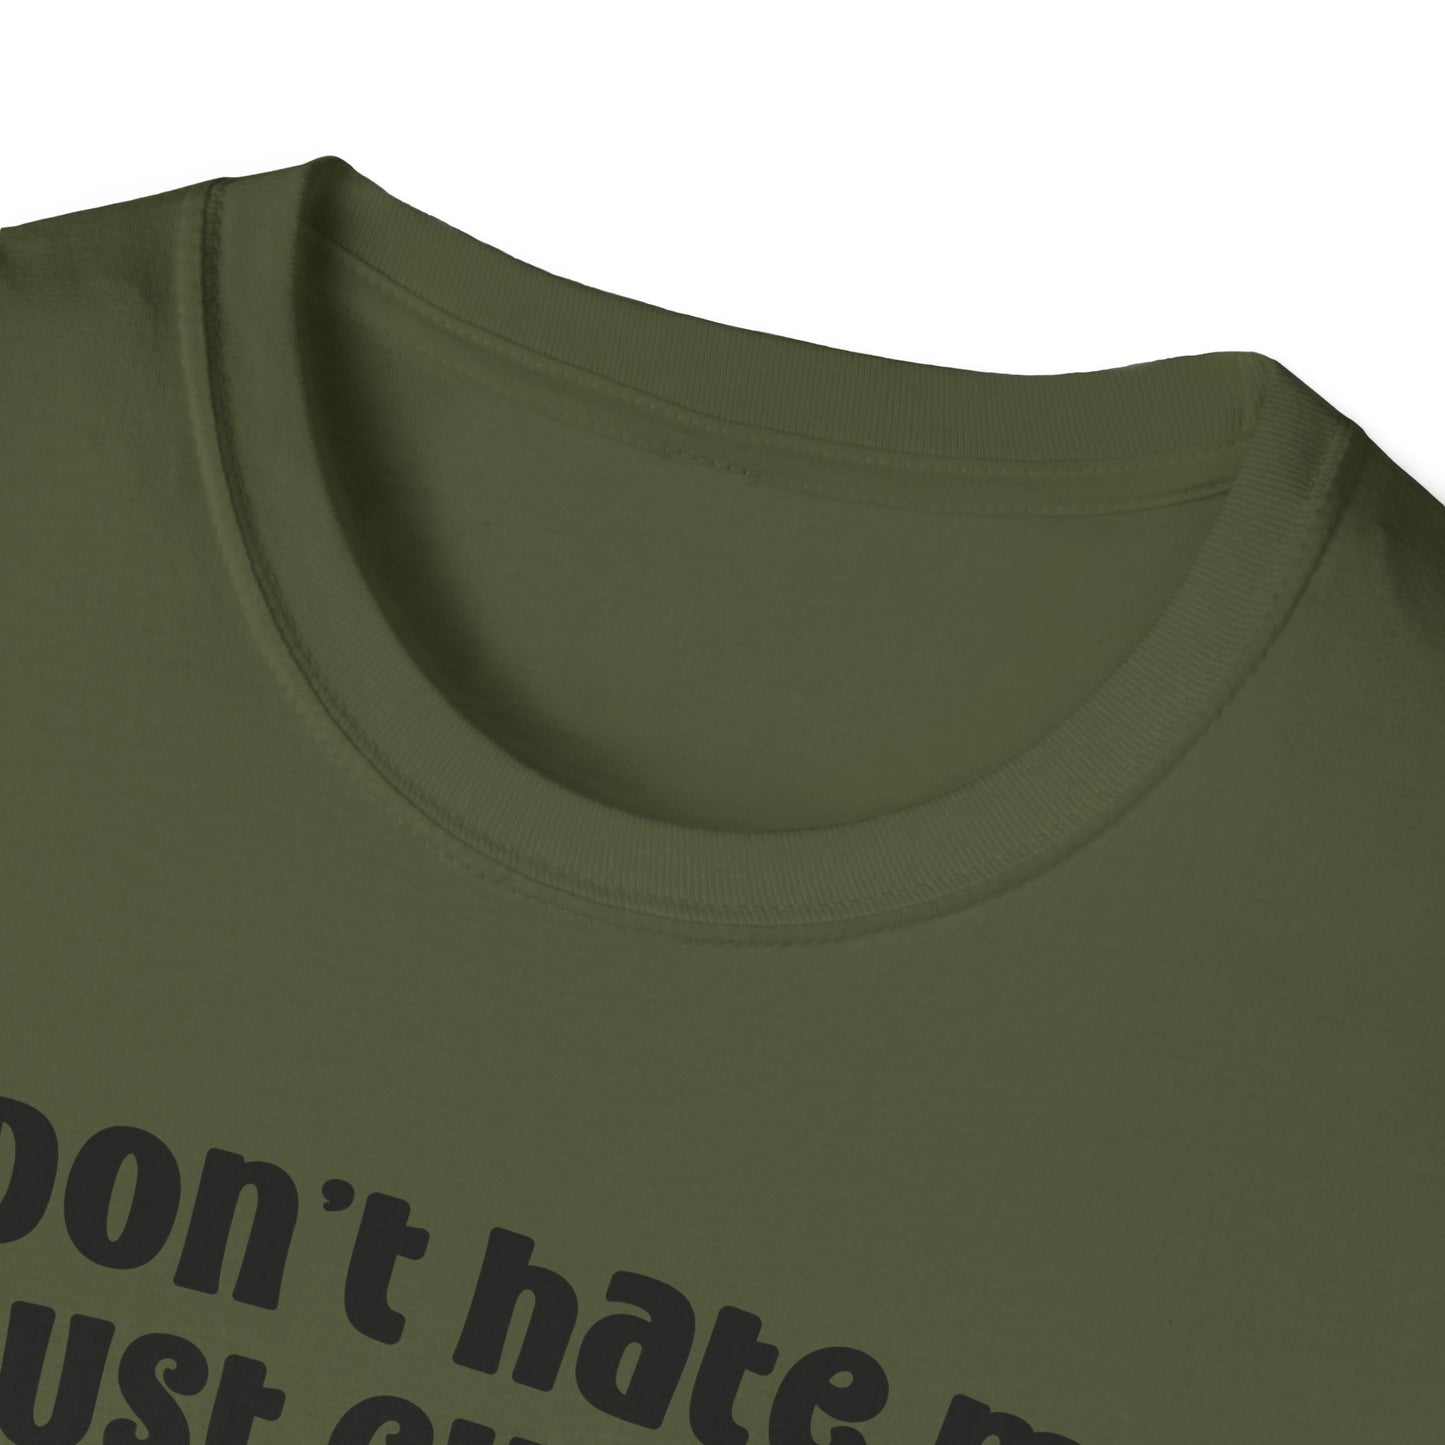 "Dont Hate Me Just Cuz Im A Little Cooler" Unisex Softstyle T-Shirt